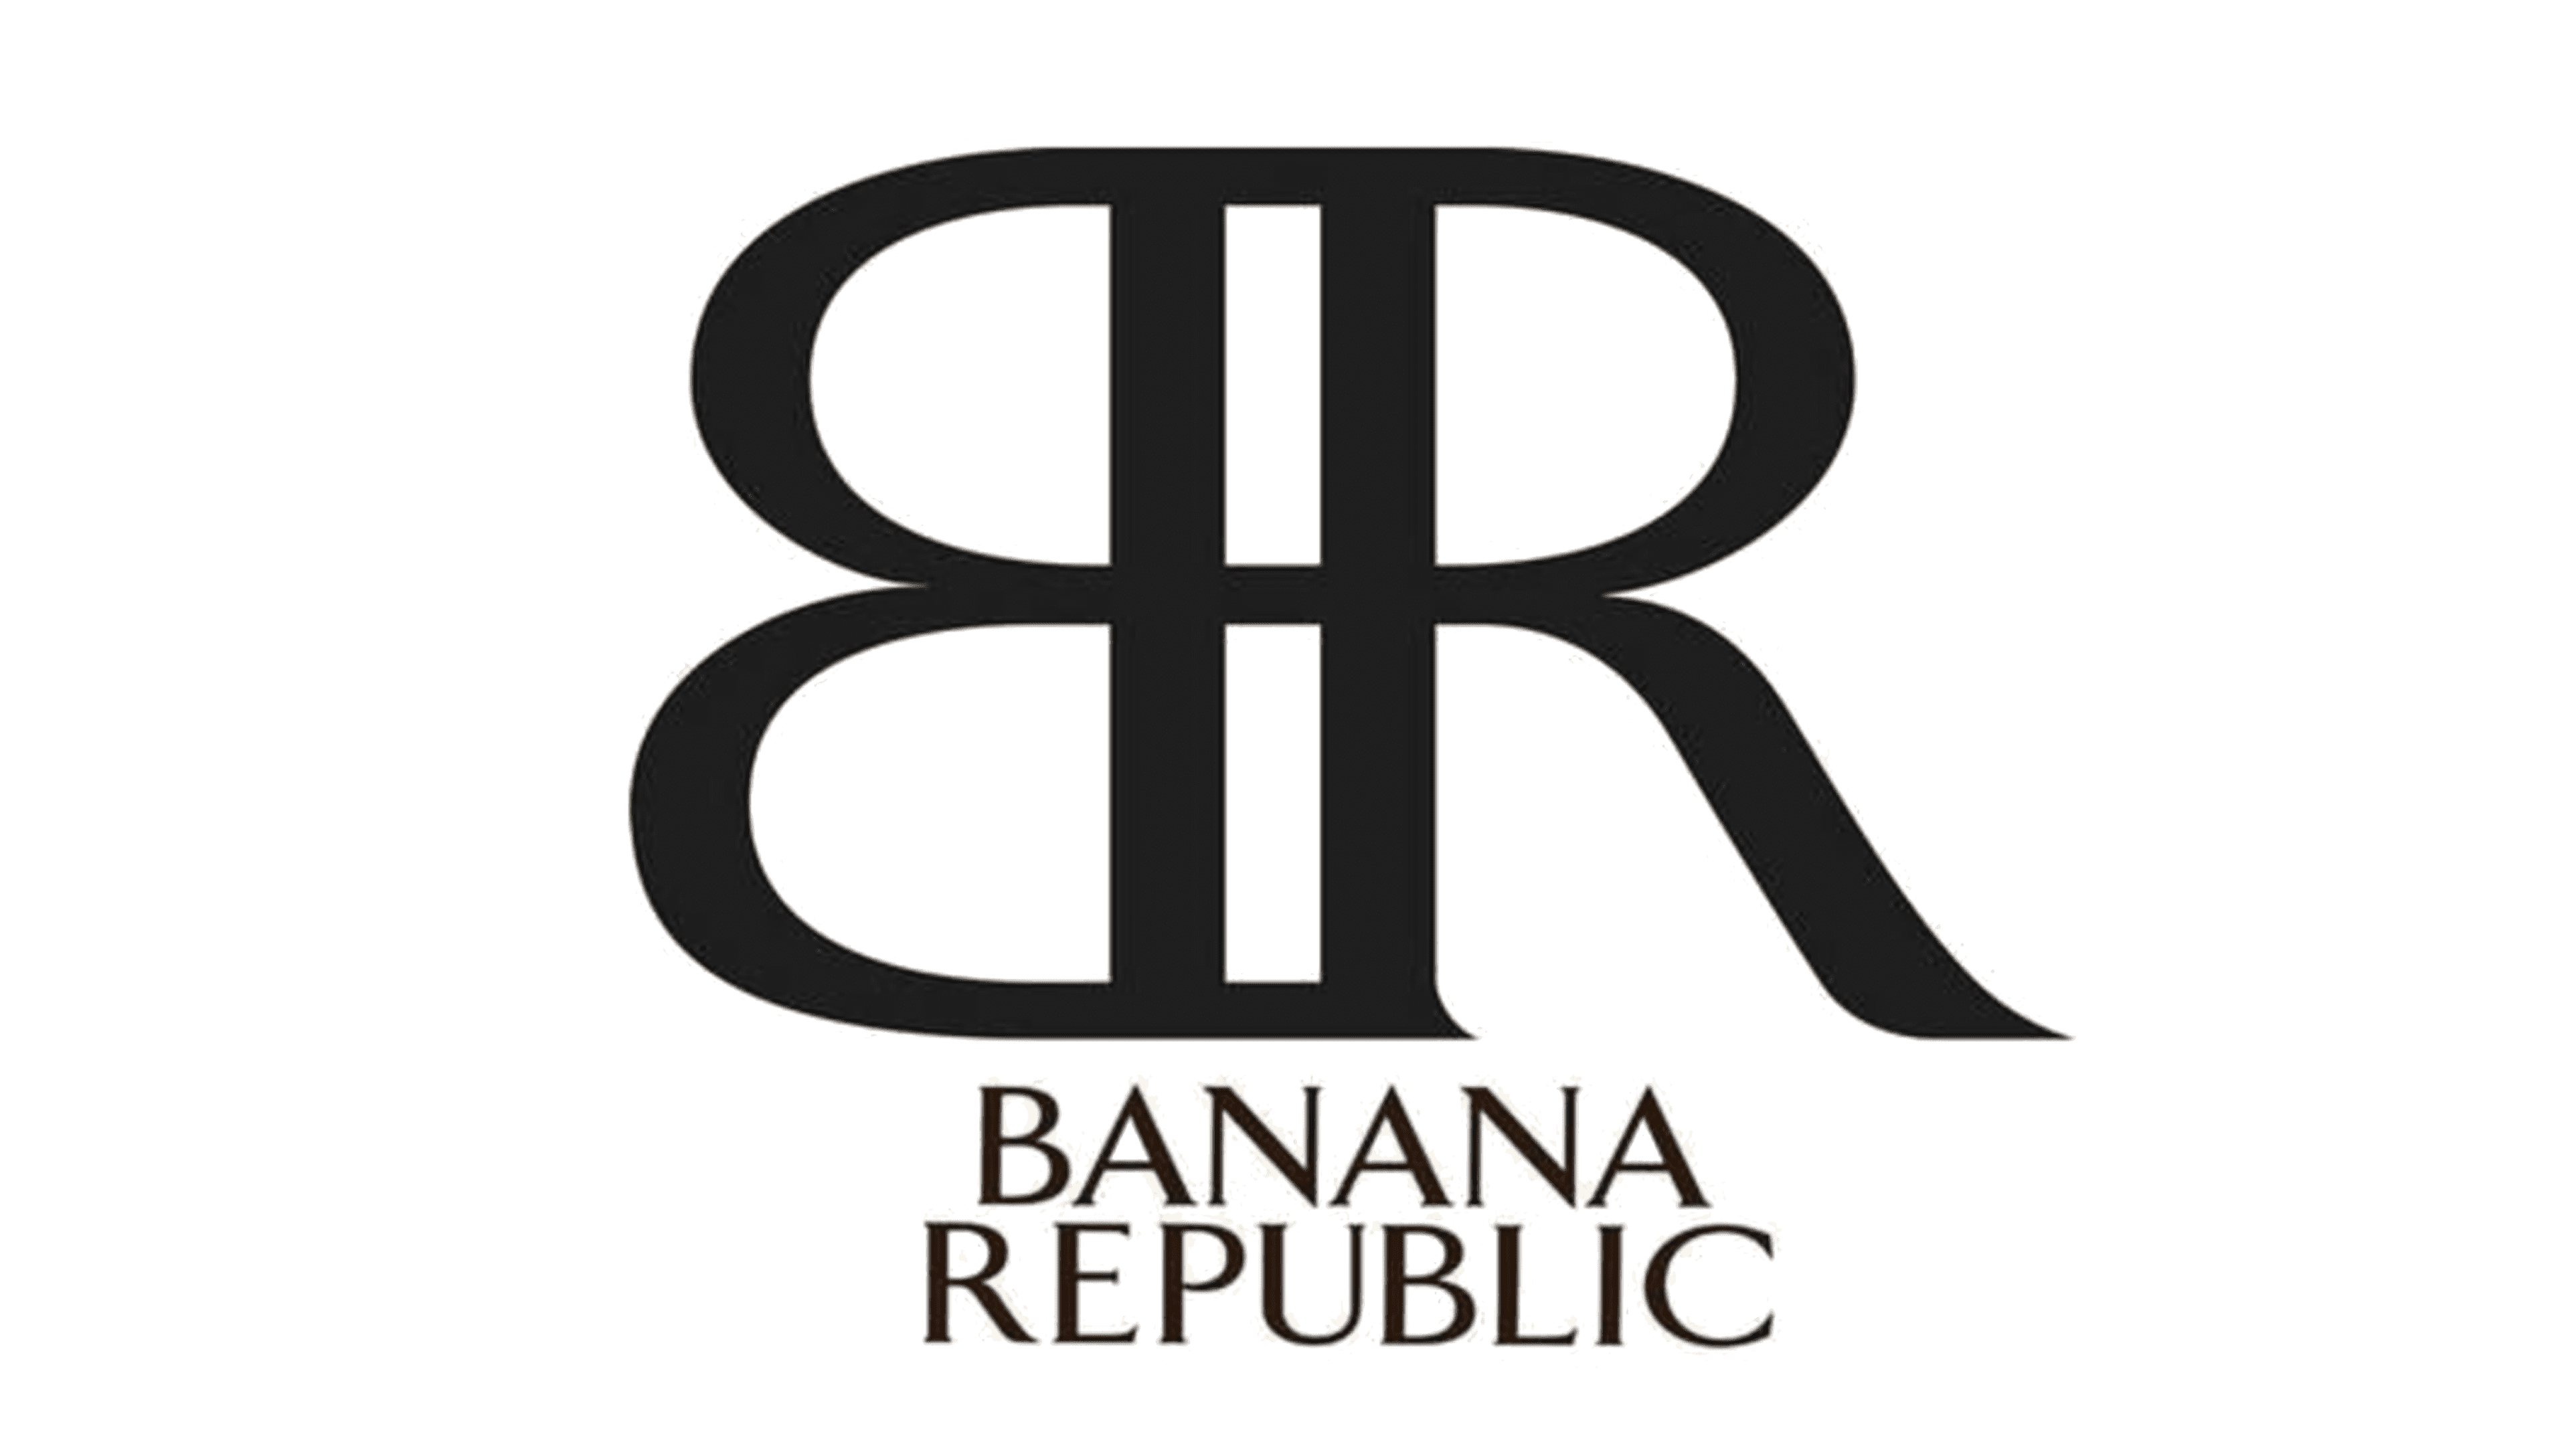 https://1000logos.net/wp-content/uploads/2020/06/Banana-Republic-logo.png